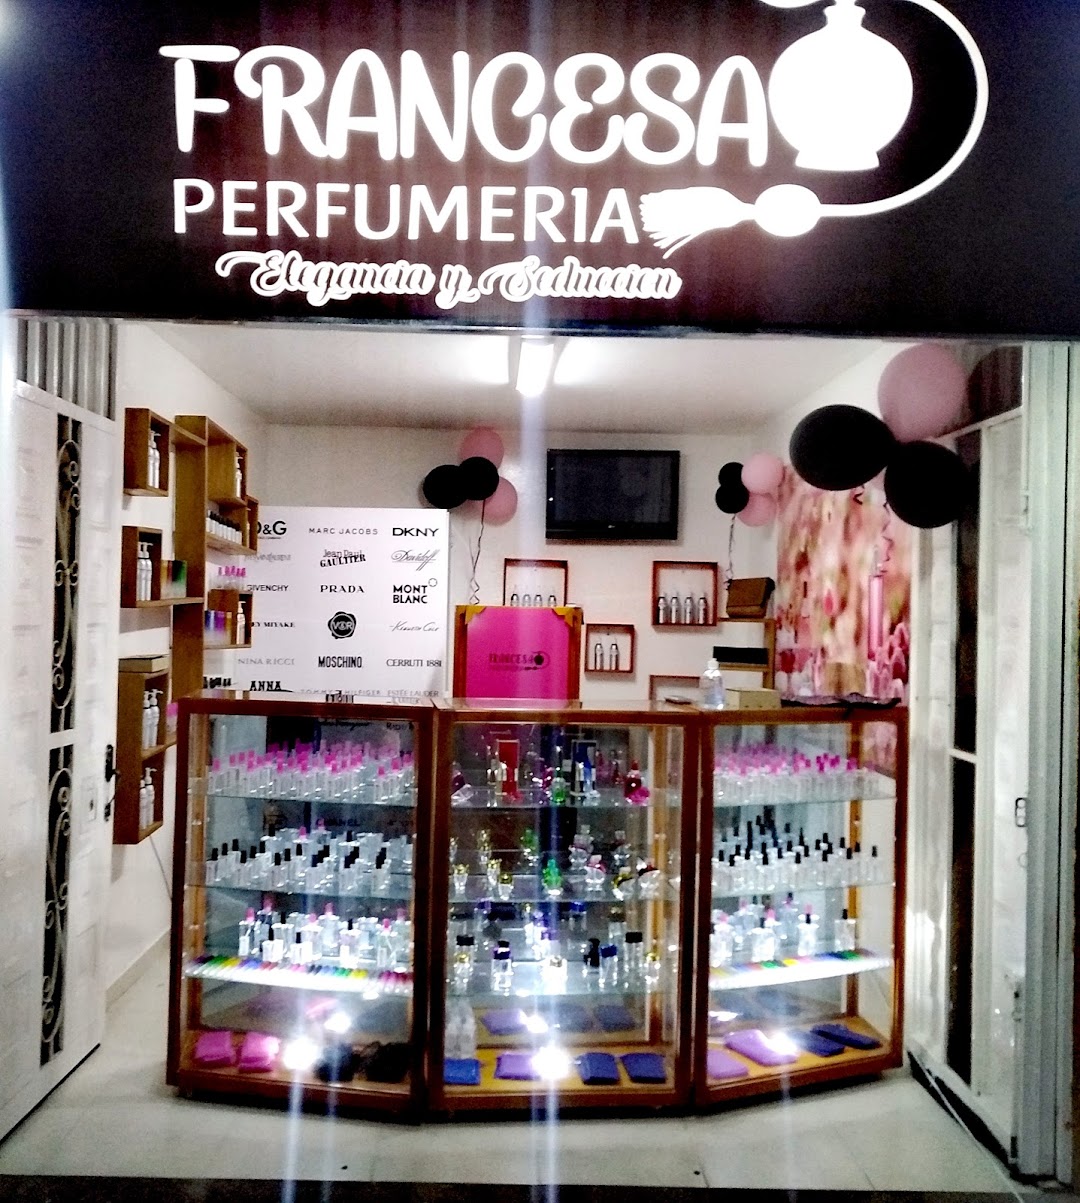 Perfumería FRANCESA